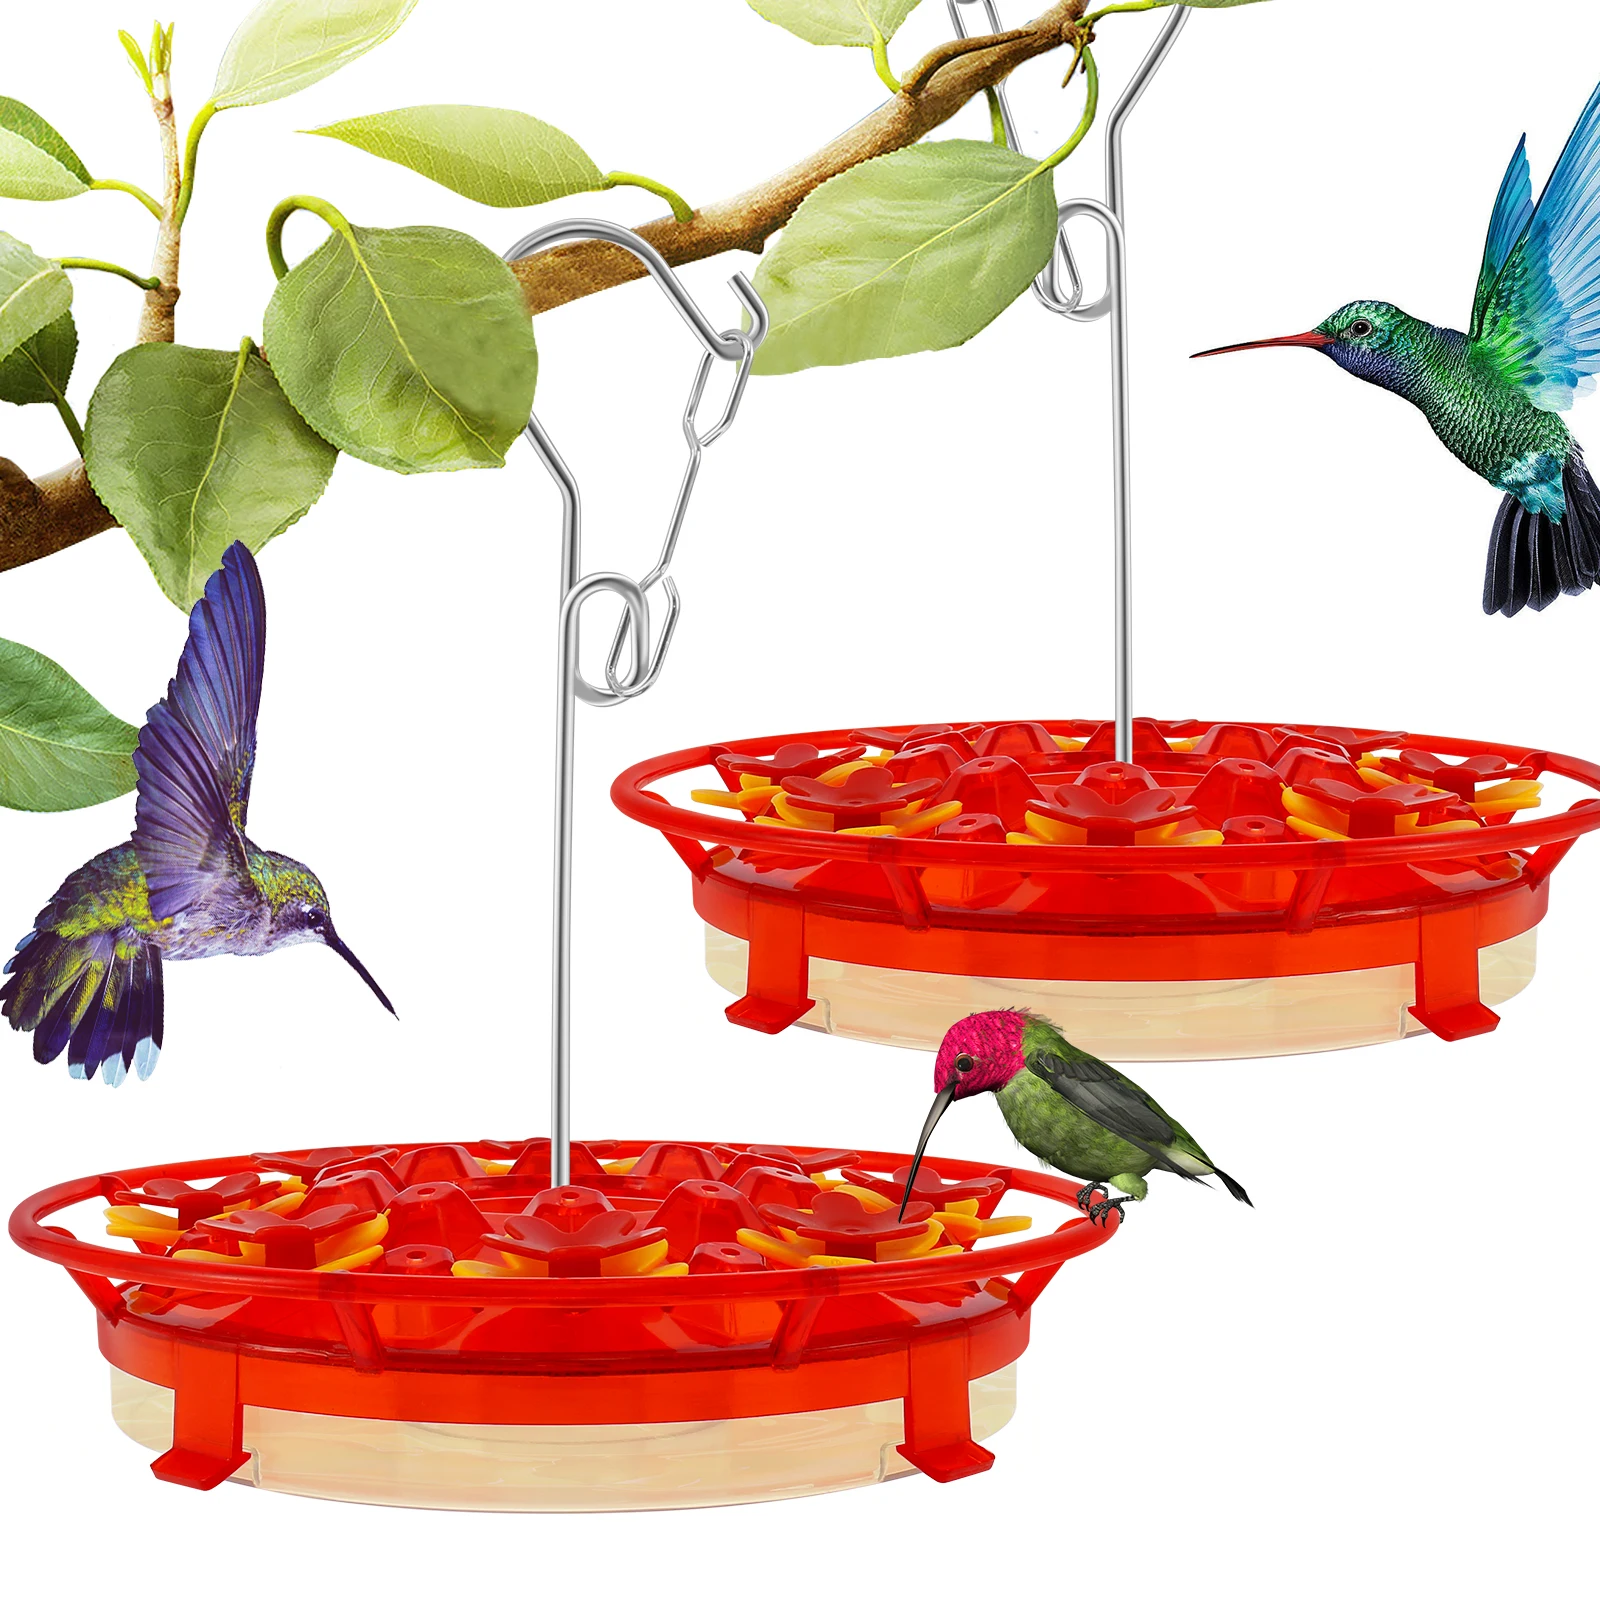 

New 2Pcs Hanging Hummingbird Feeder with 16 Feeding Ports Leakproof Humming Bird Feeder with Ant Moat Refillable Hummingbird